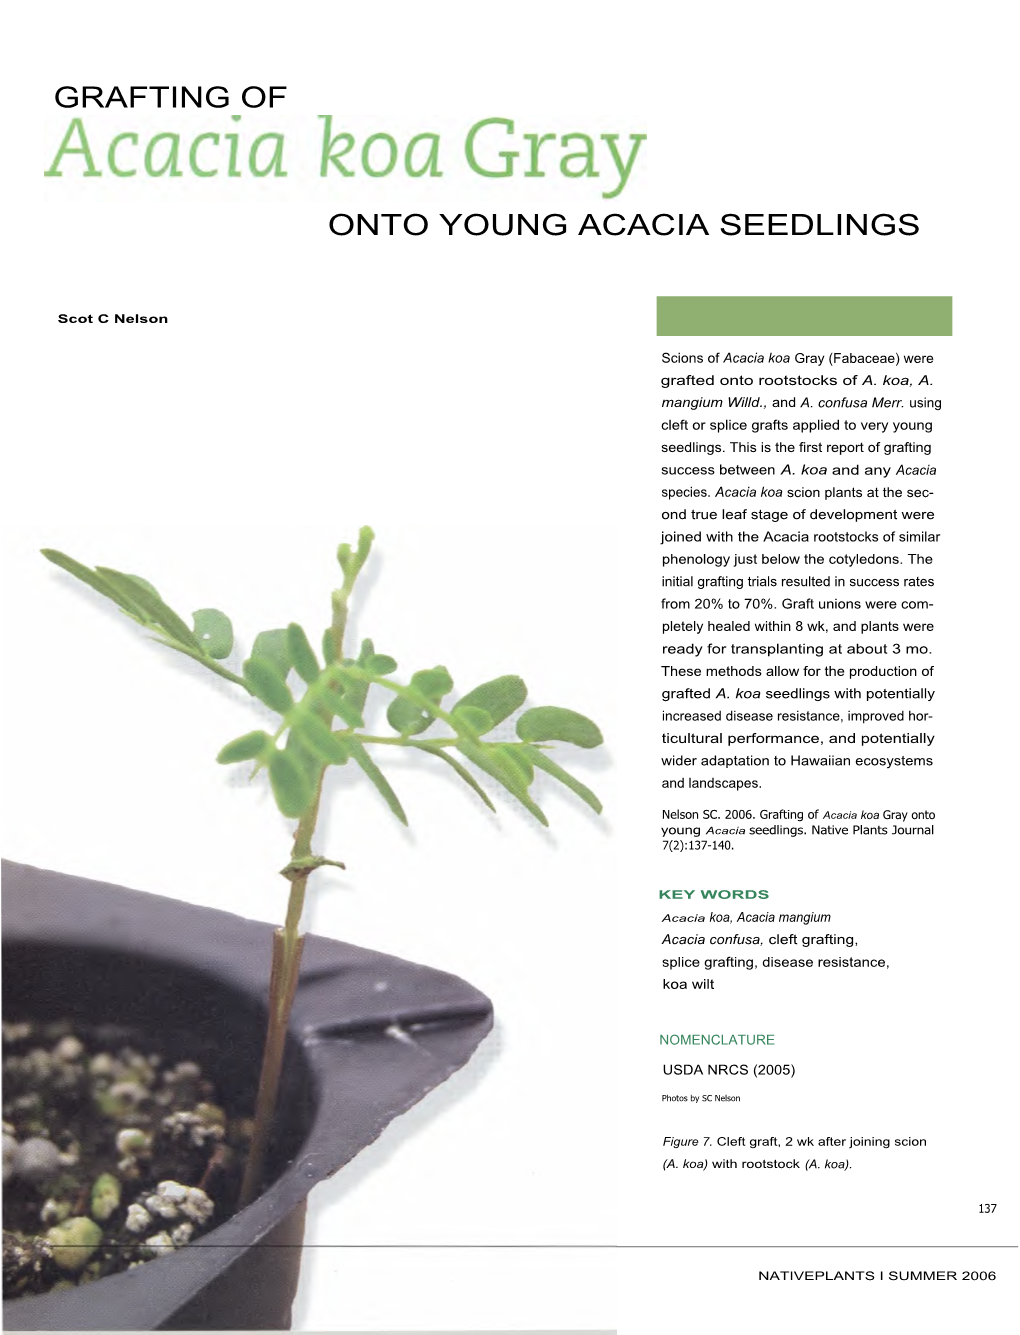 Grafting of Onto Young Acacia Seedlings